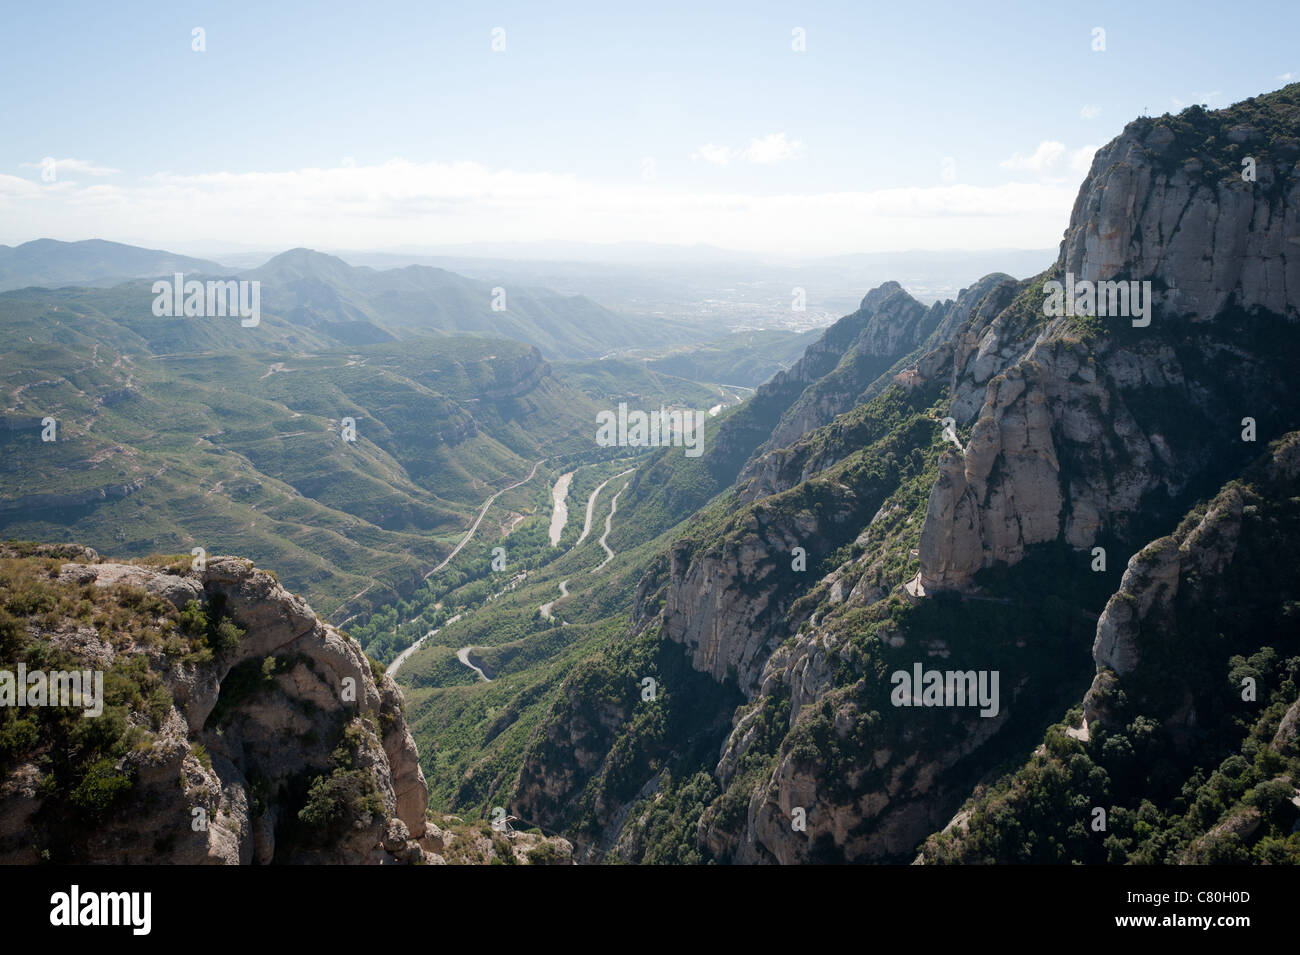 Un panorama de l'abbaye de Santa Maria de Montserrat en Catalogne, Espagne. Banque D'Images